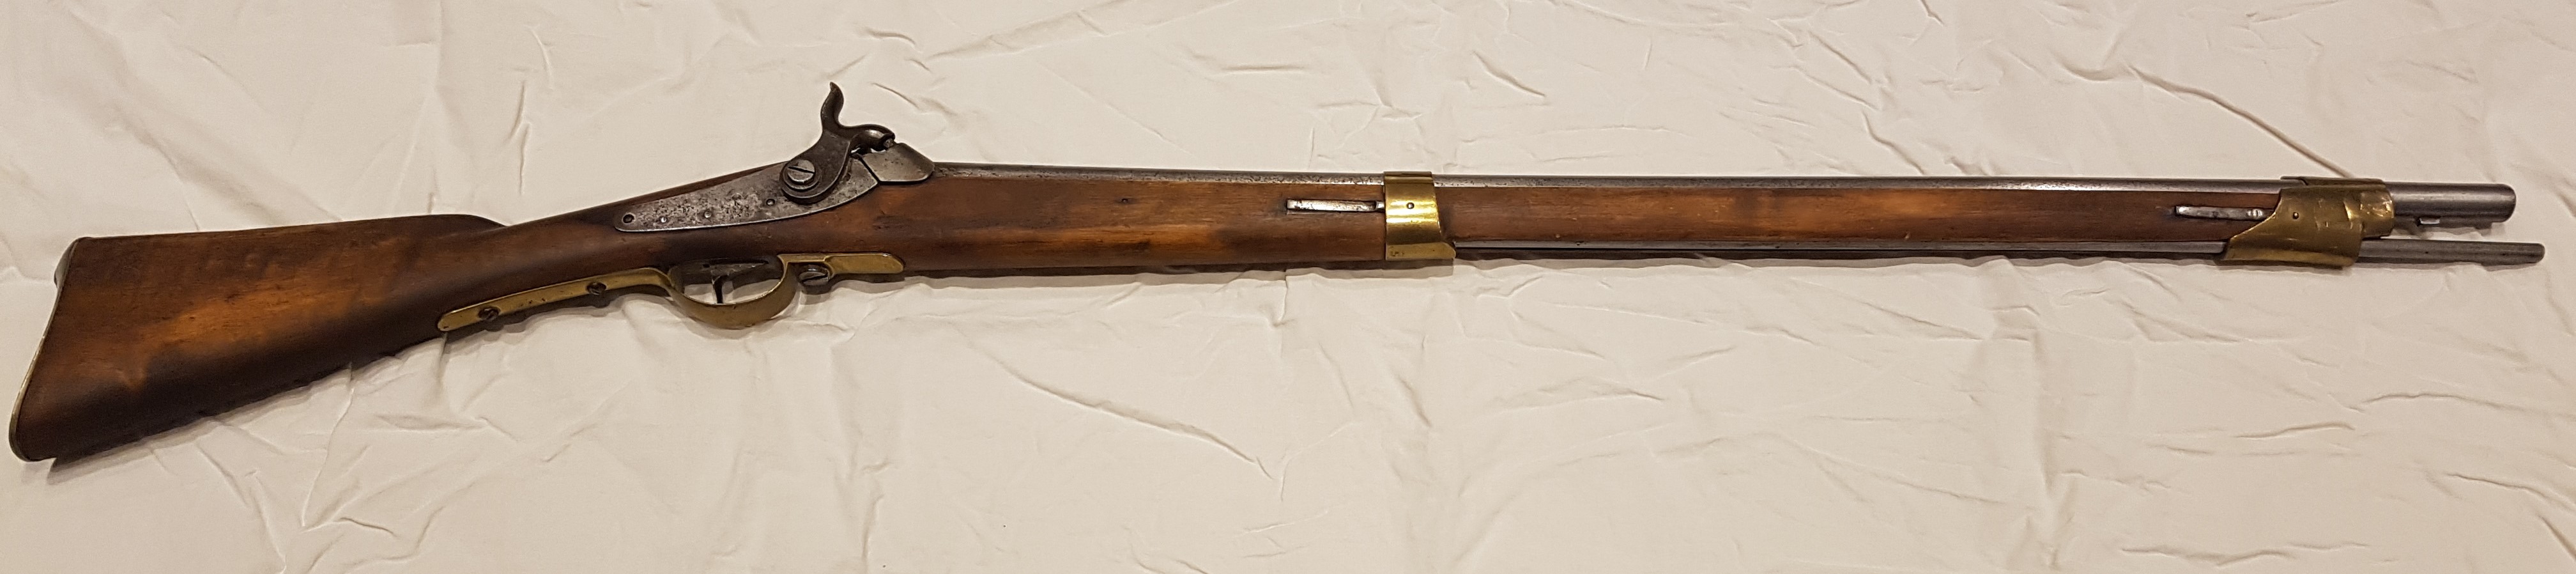 ./guns/rifle/bilder/Muskett-Kongsberg-M1843-Marine-1849-856-1.jpg